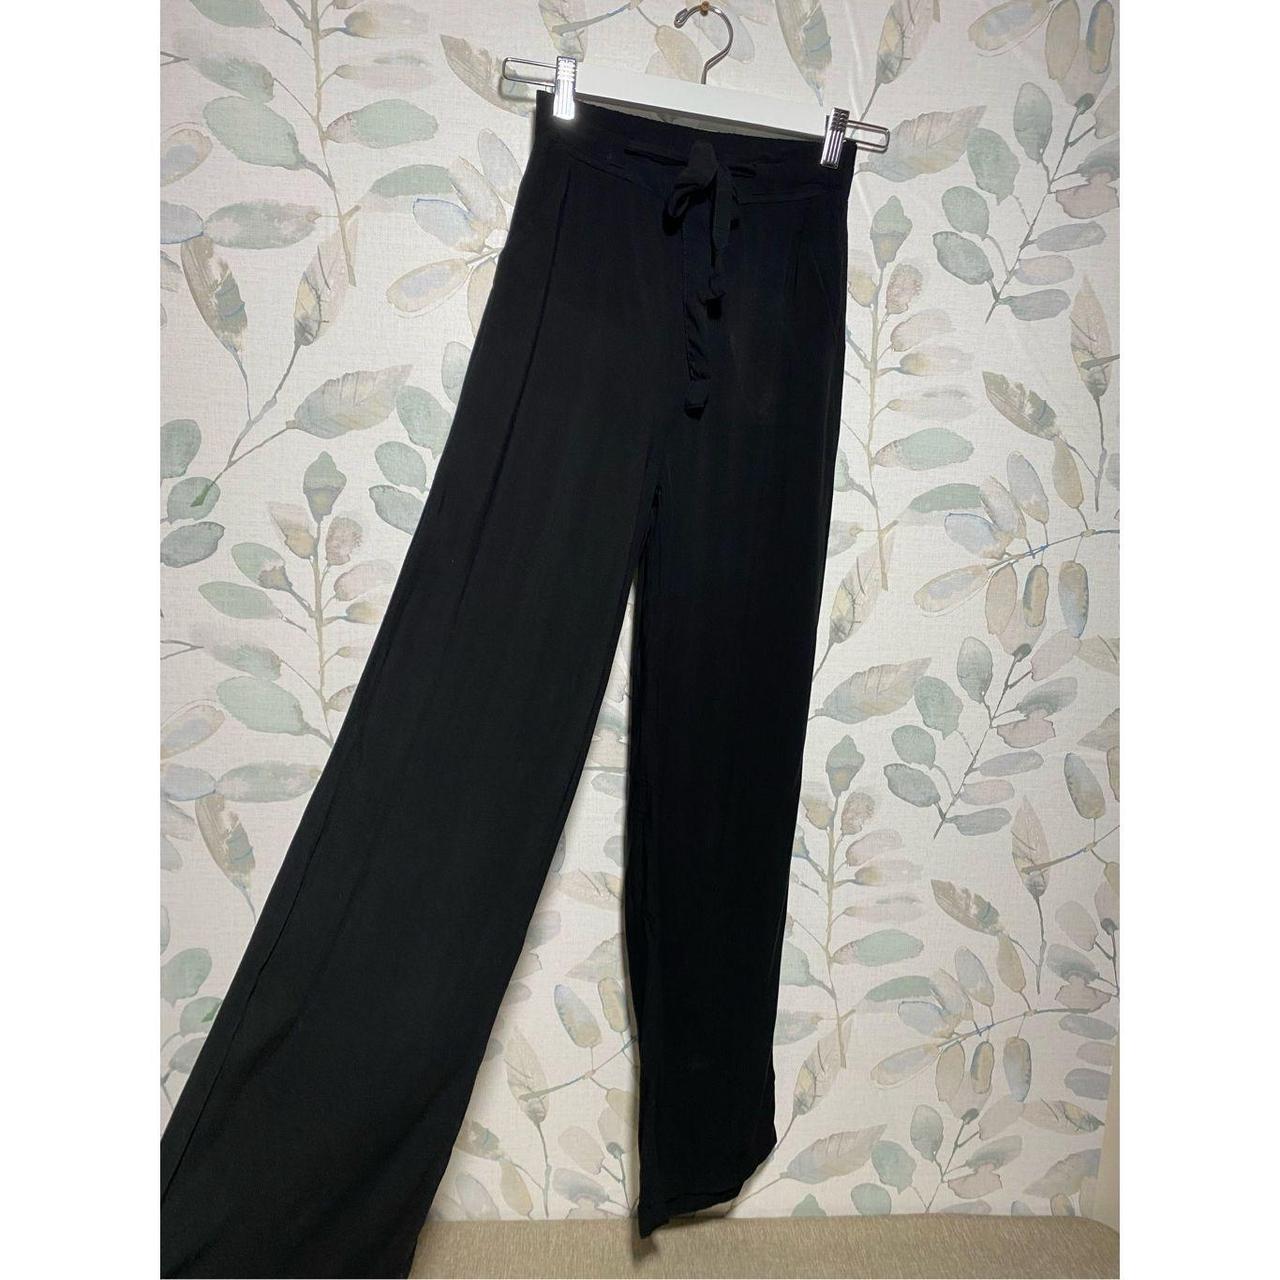 Jones New York Sydney Black Pants Slacks Womens Size 4 Straight Leg NEW  with Tag | eBay